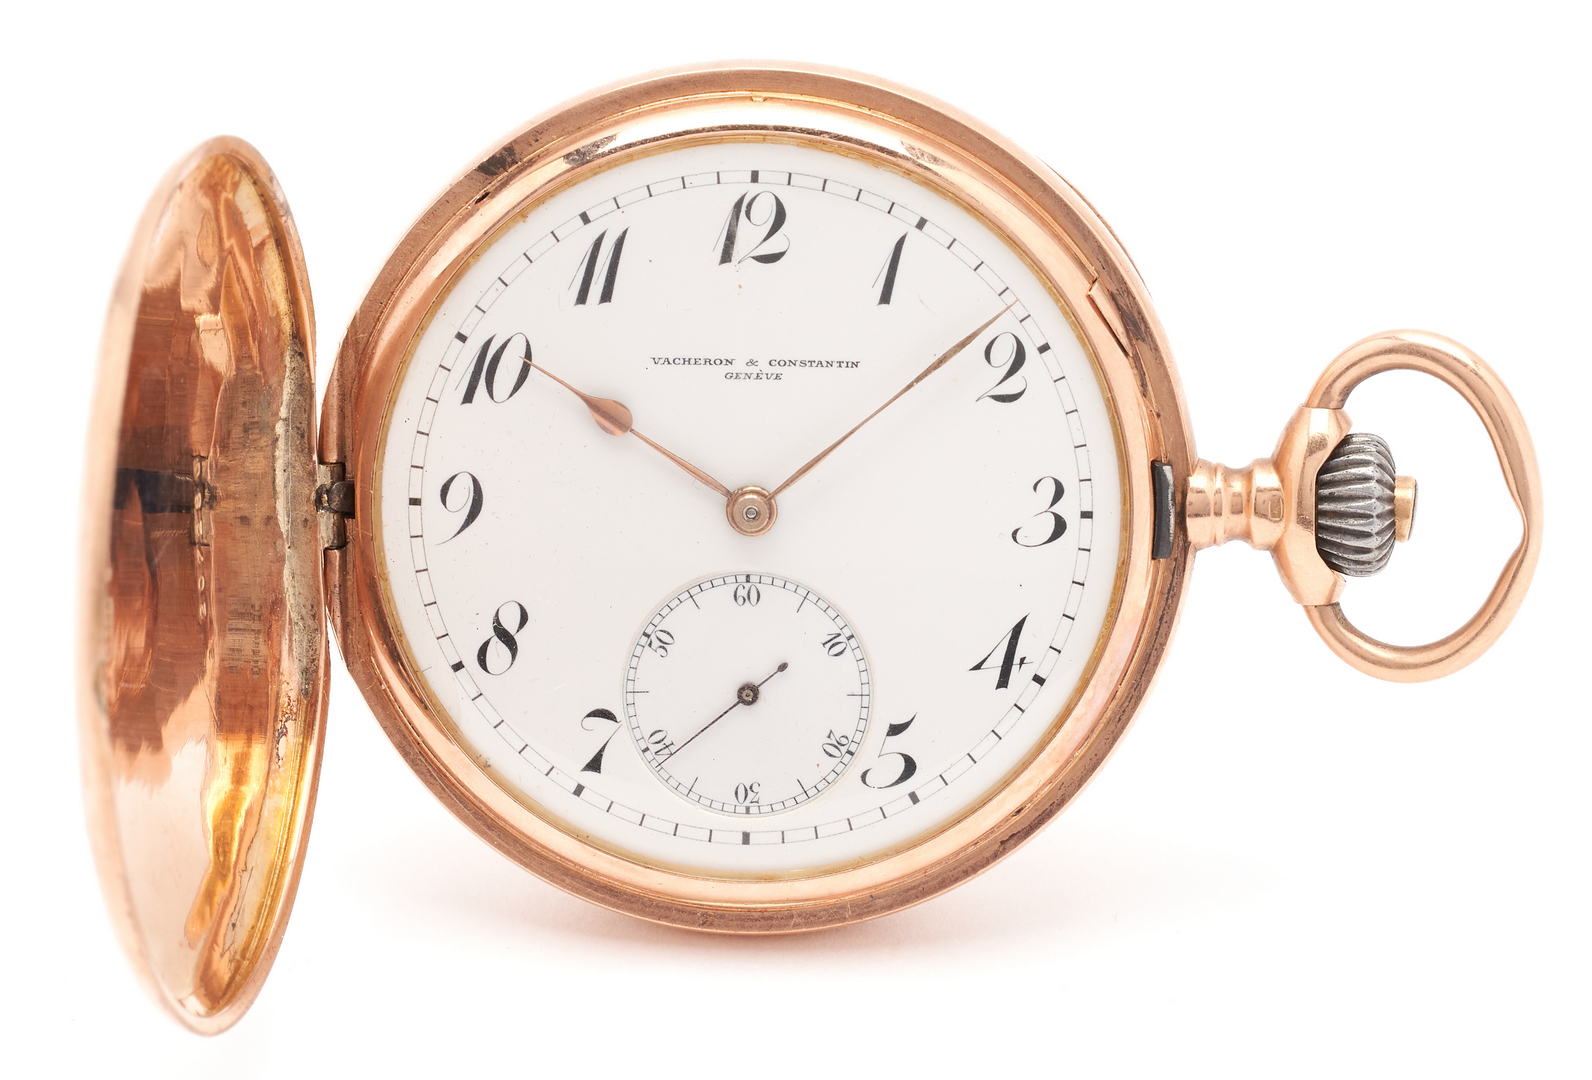 Lot 73: 1906 Vacheron & Constantin Milan Grand Prix 14K Pocket Watch